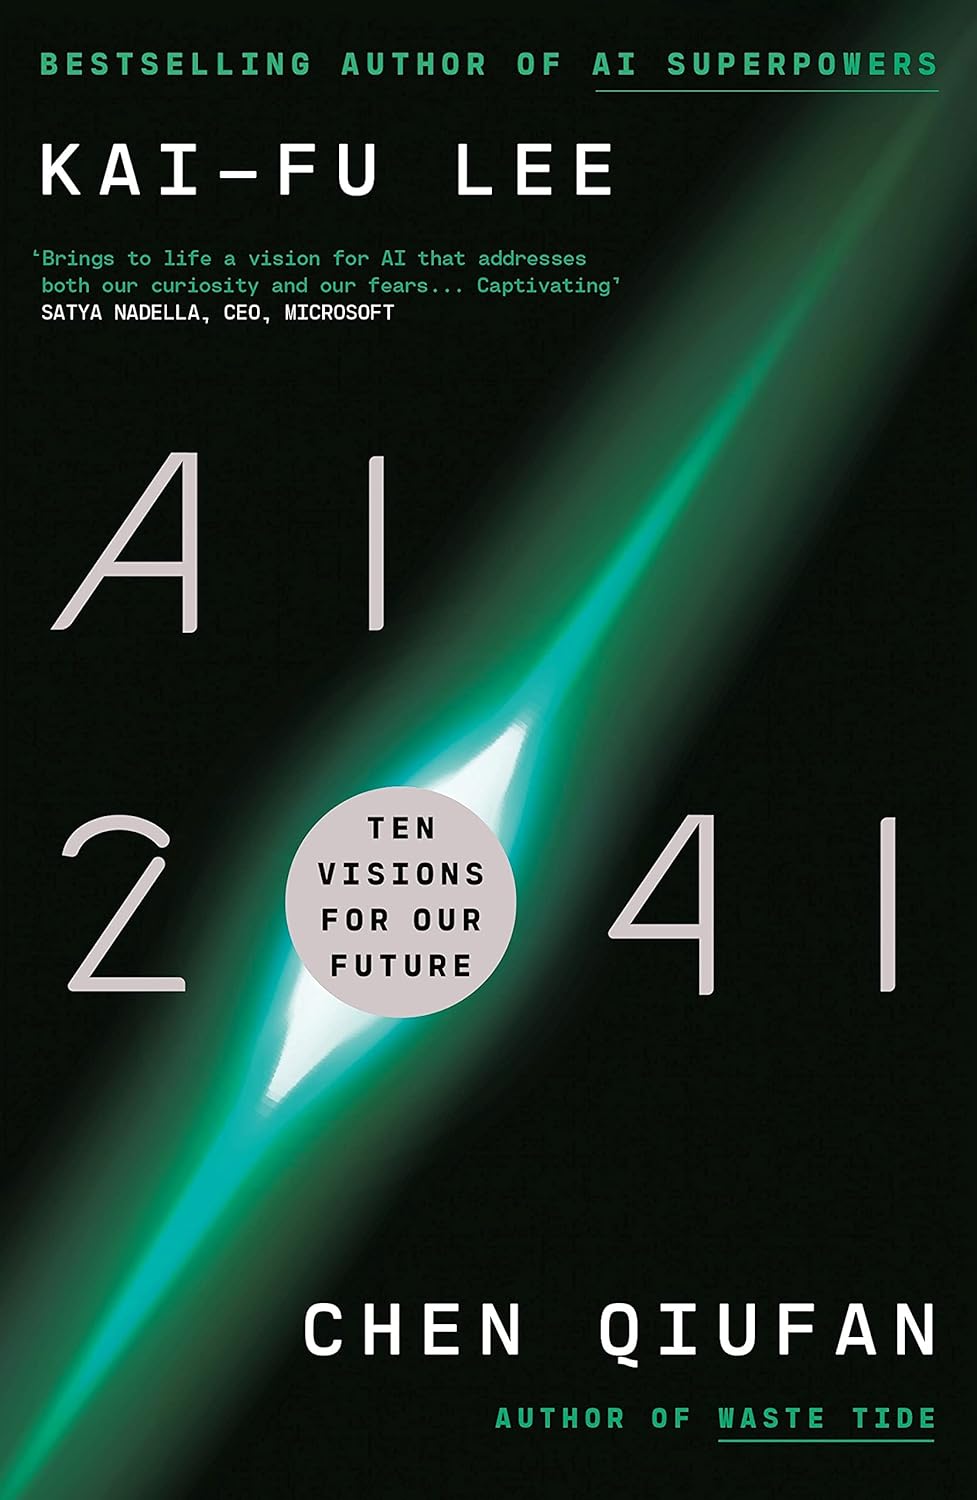 AI 2041 by Kai-Fu Lee and Chen Qiufan